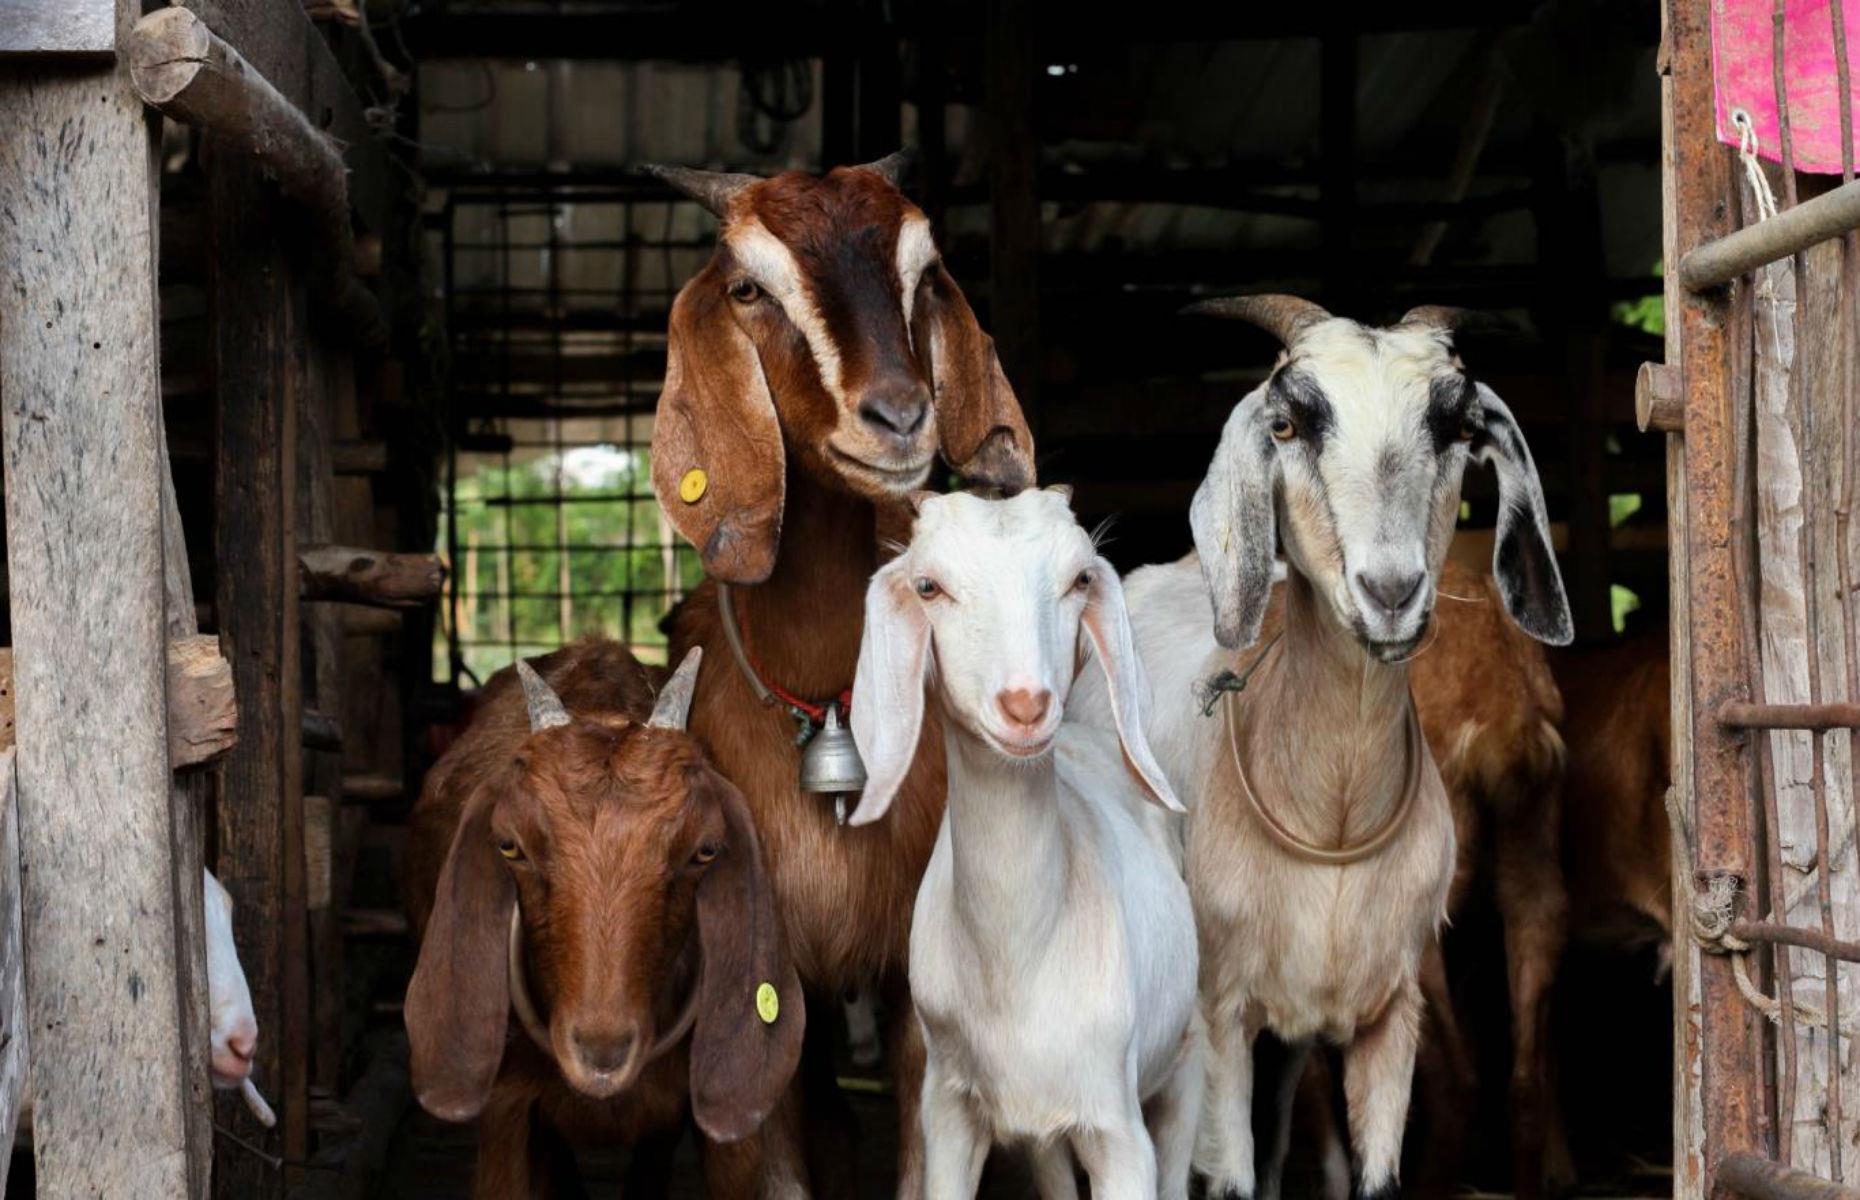 A goat farm in Alabama